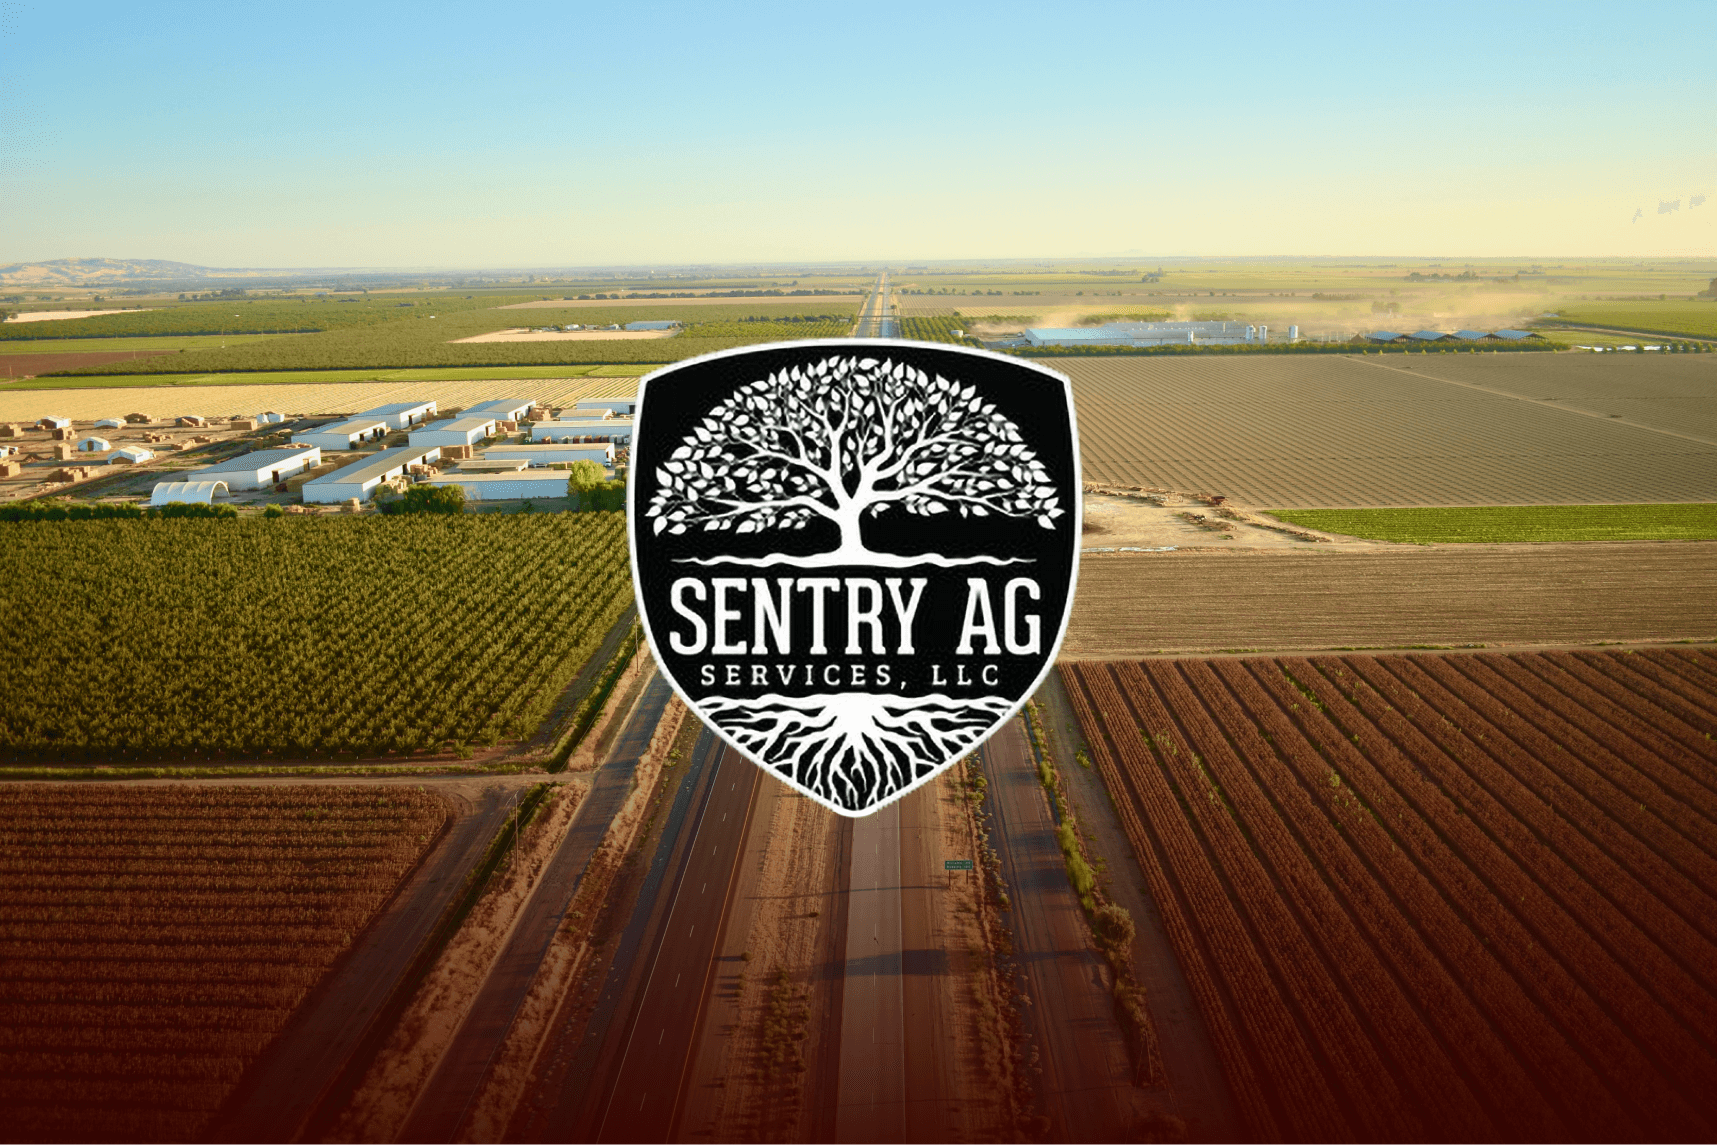 sentry ag logo over farm field